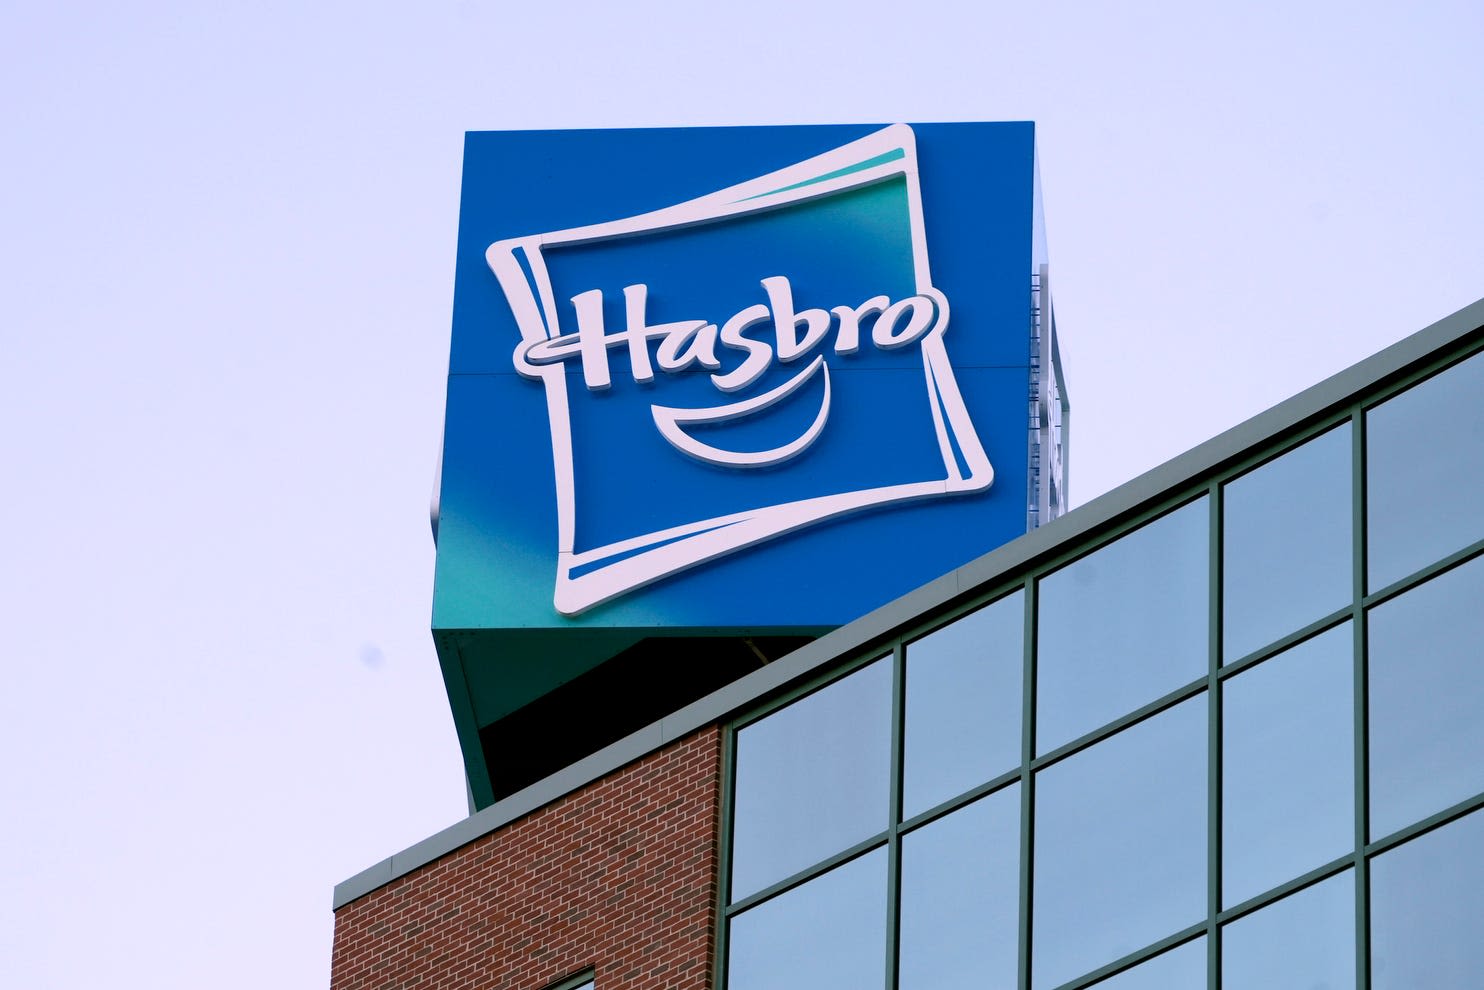 Cost cutting, Peppa Pig and Furby: How Hasbro beat its Q1 profit estimates